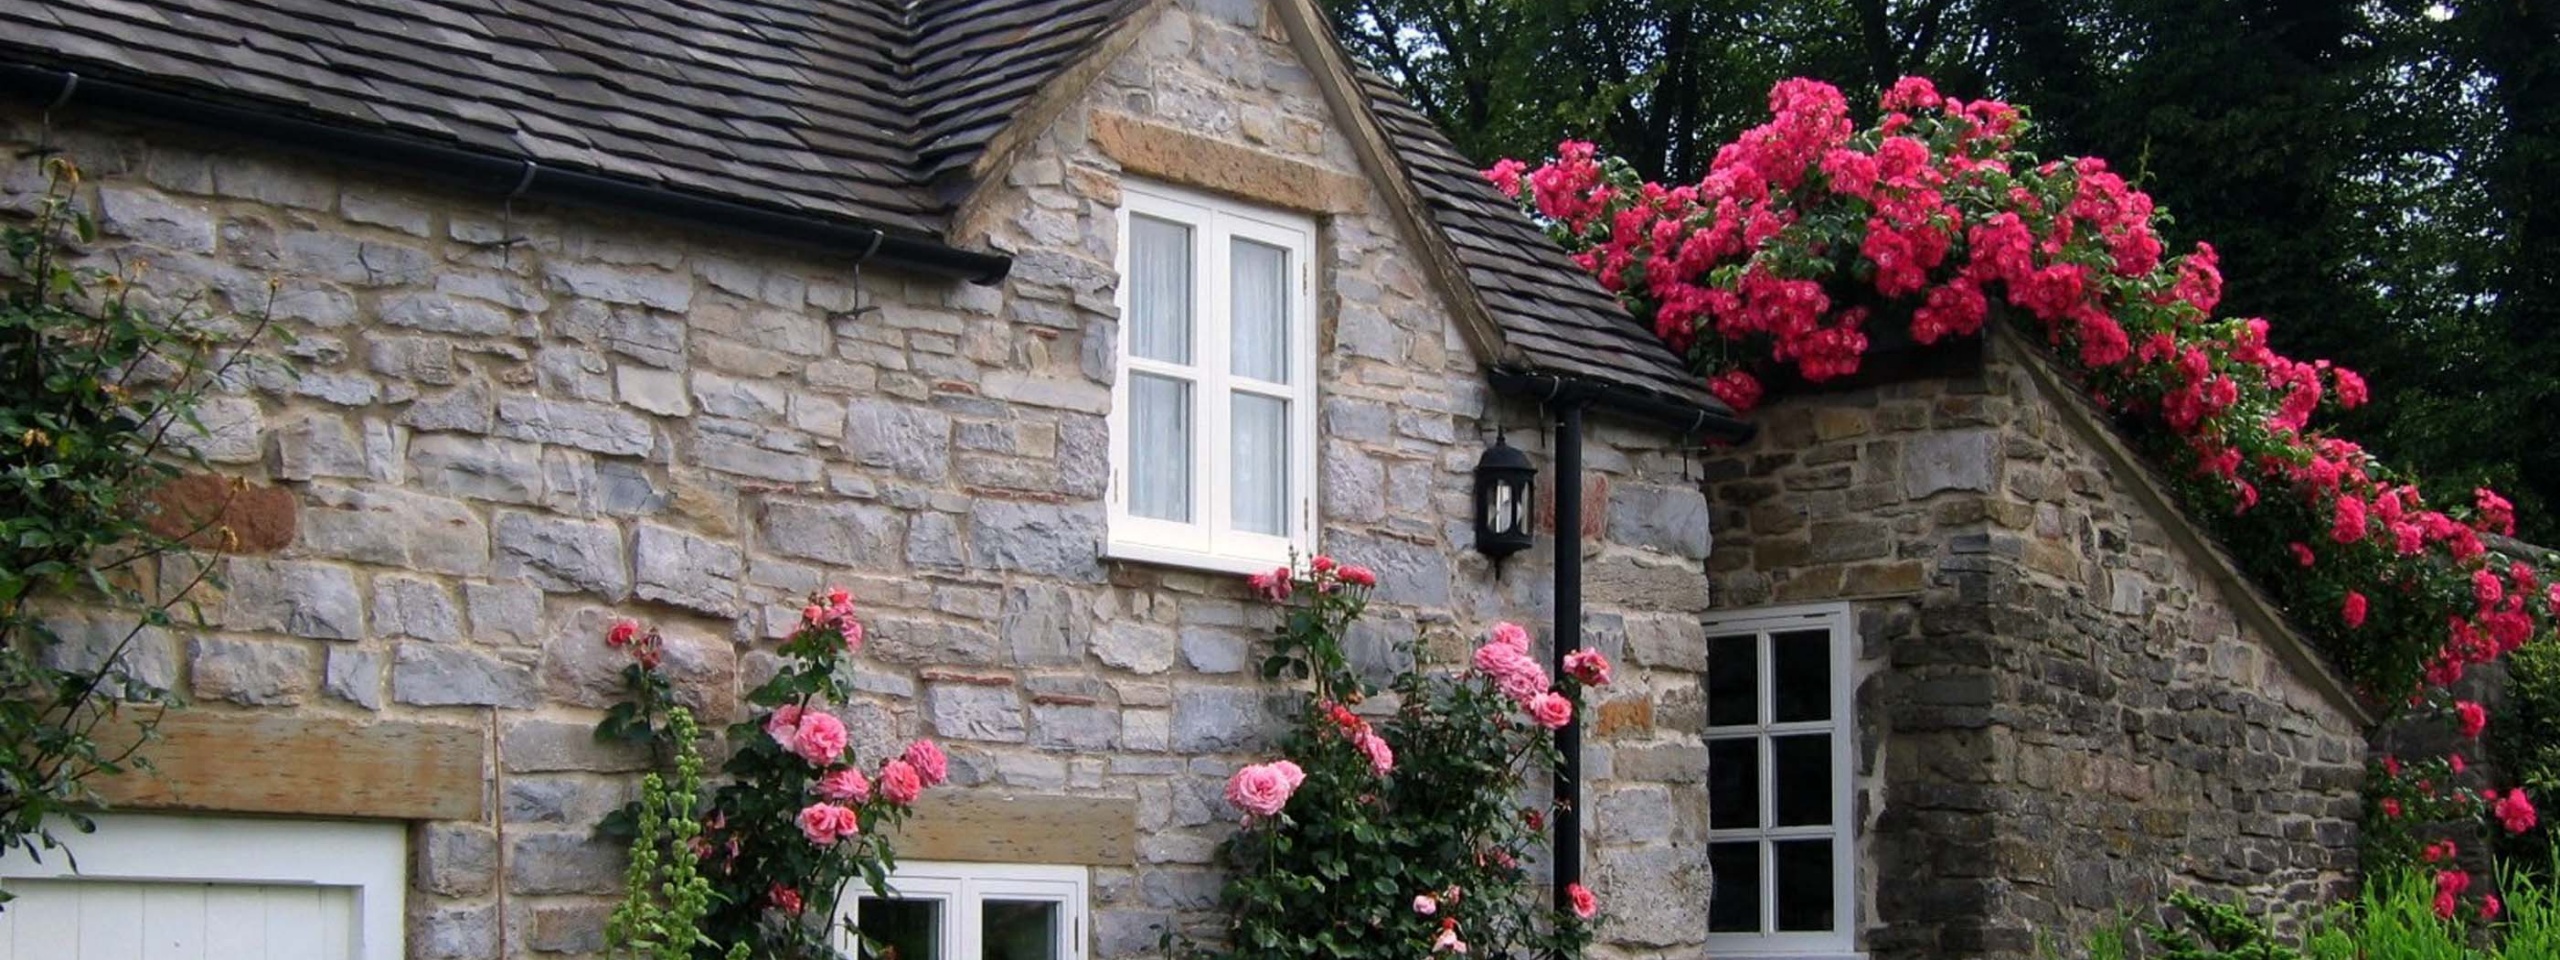 Cottage With Roses Village Of Thorpe Tissington Trail Derbyshire